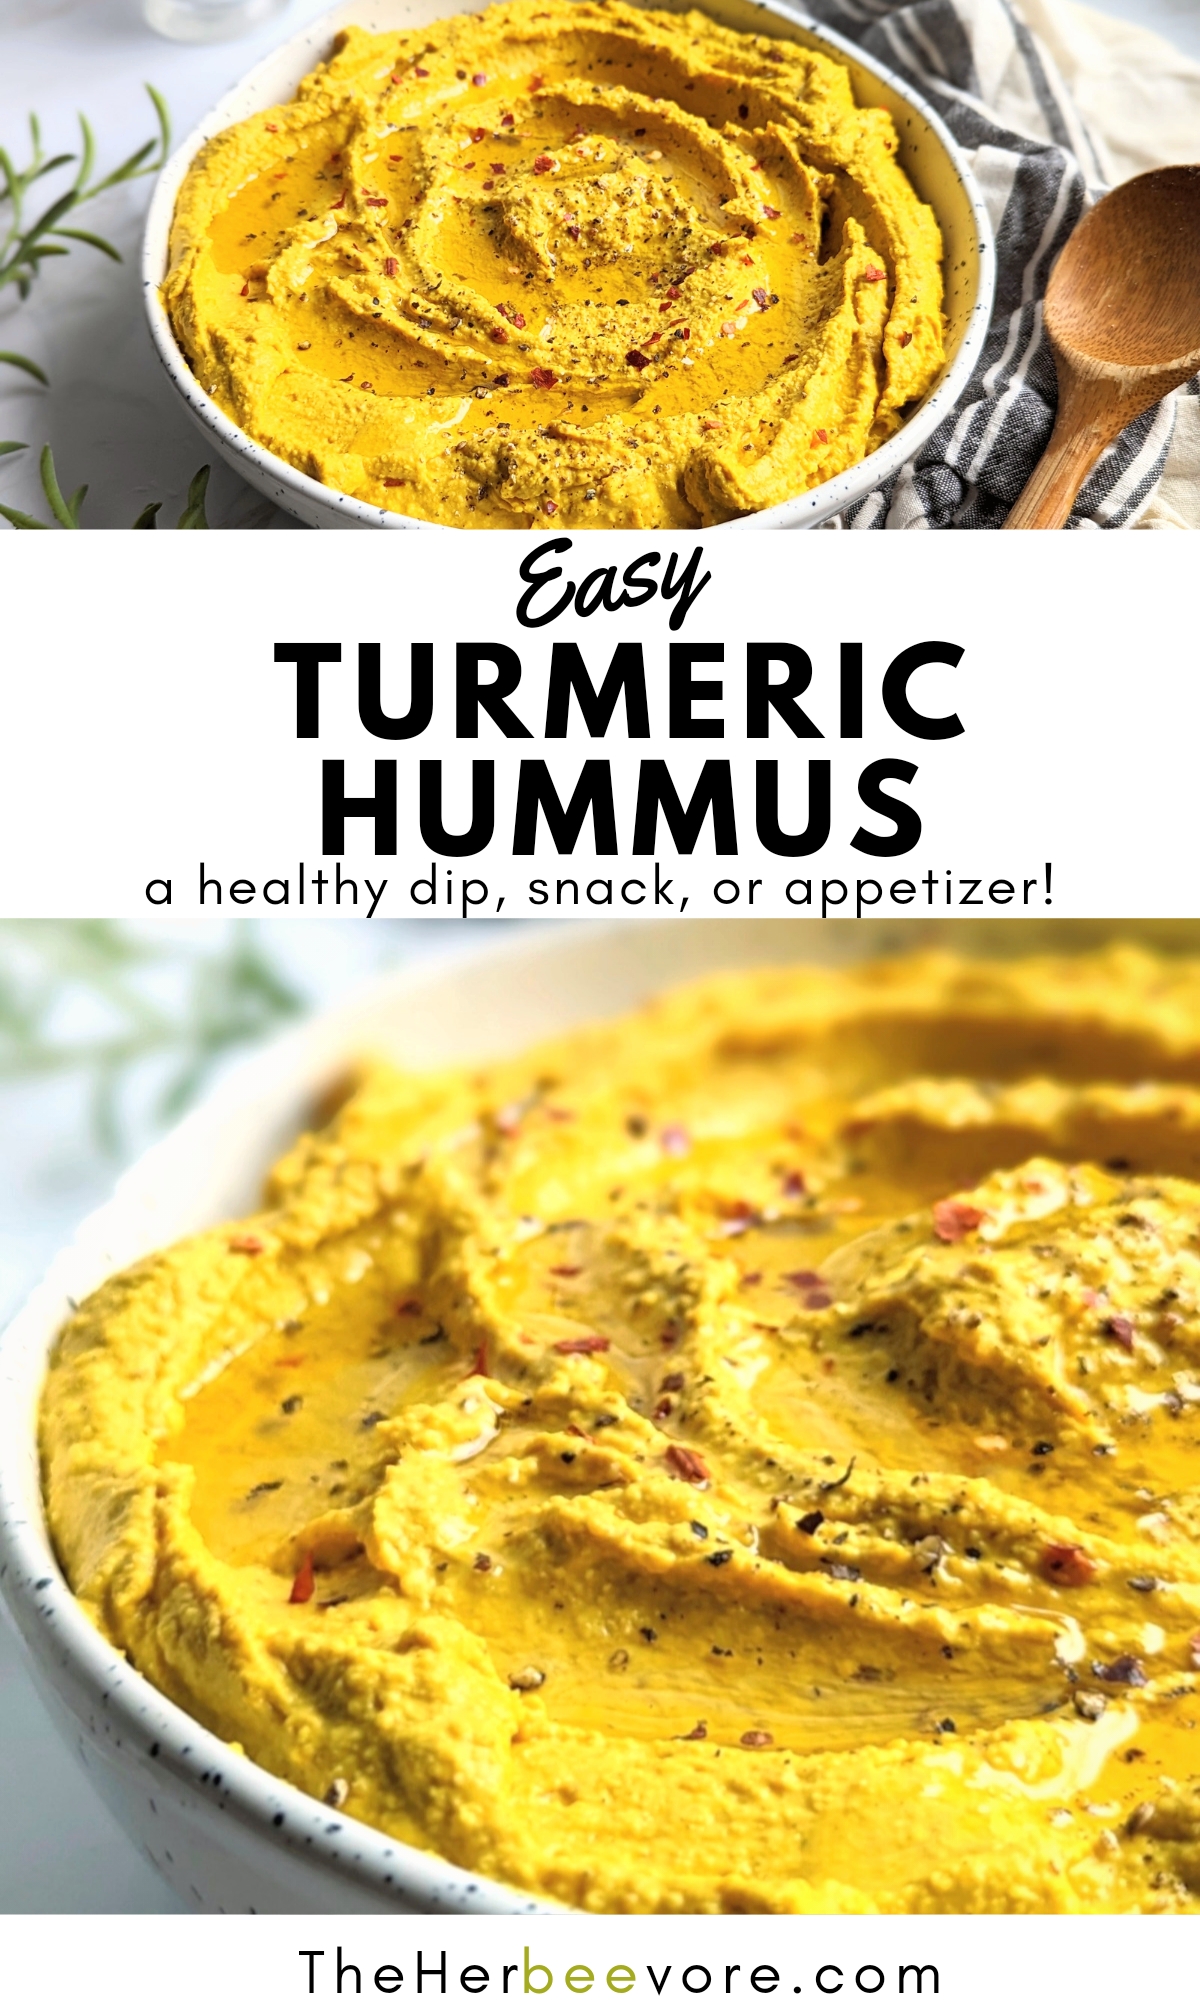 turmeric hummus recipe healthy black pepper turmeric hummus dip spread or snack, turmeric appetizer recipes